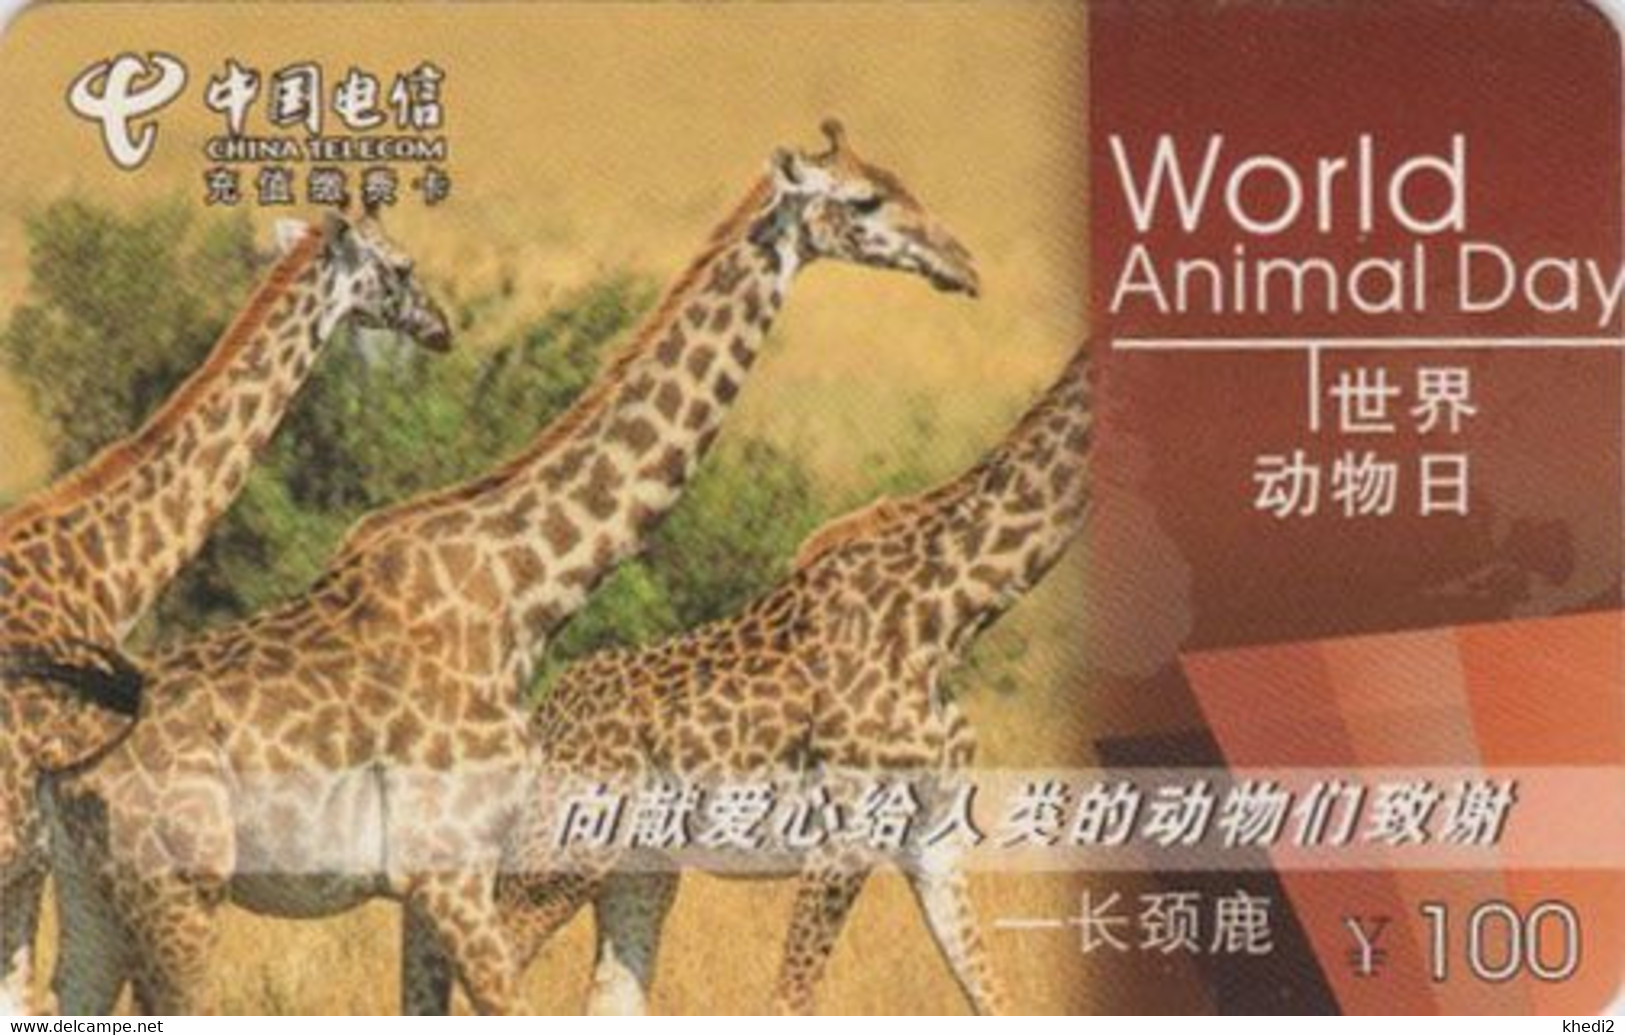 Télécarte CHINE / SERIE WORLD ANIMAL DAY - GIRAFE - GIRAFFE CHINA TELECOM Phonecard - Chine